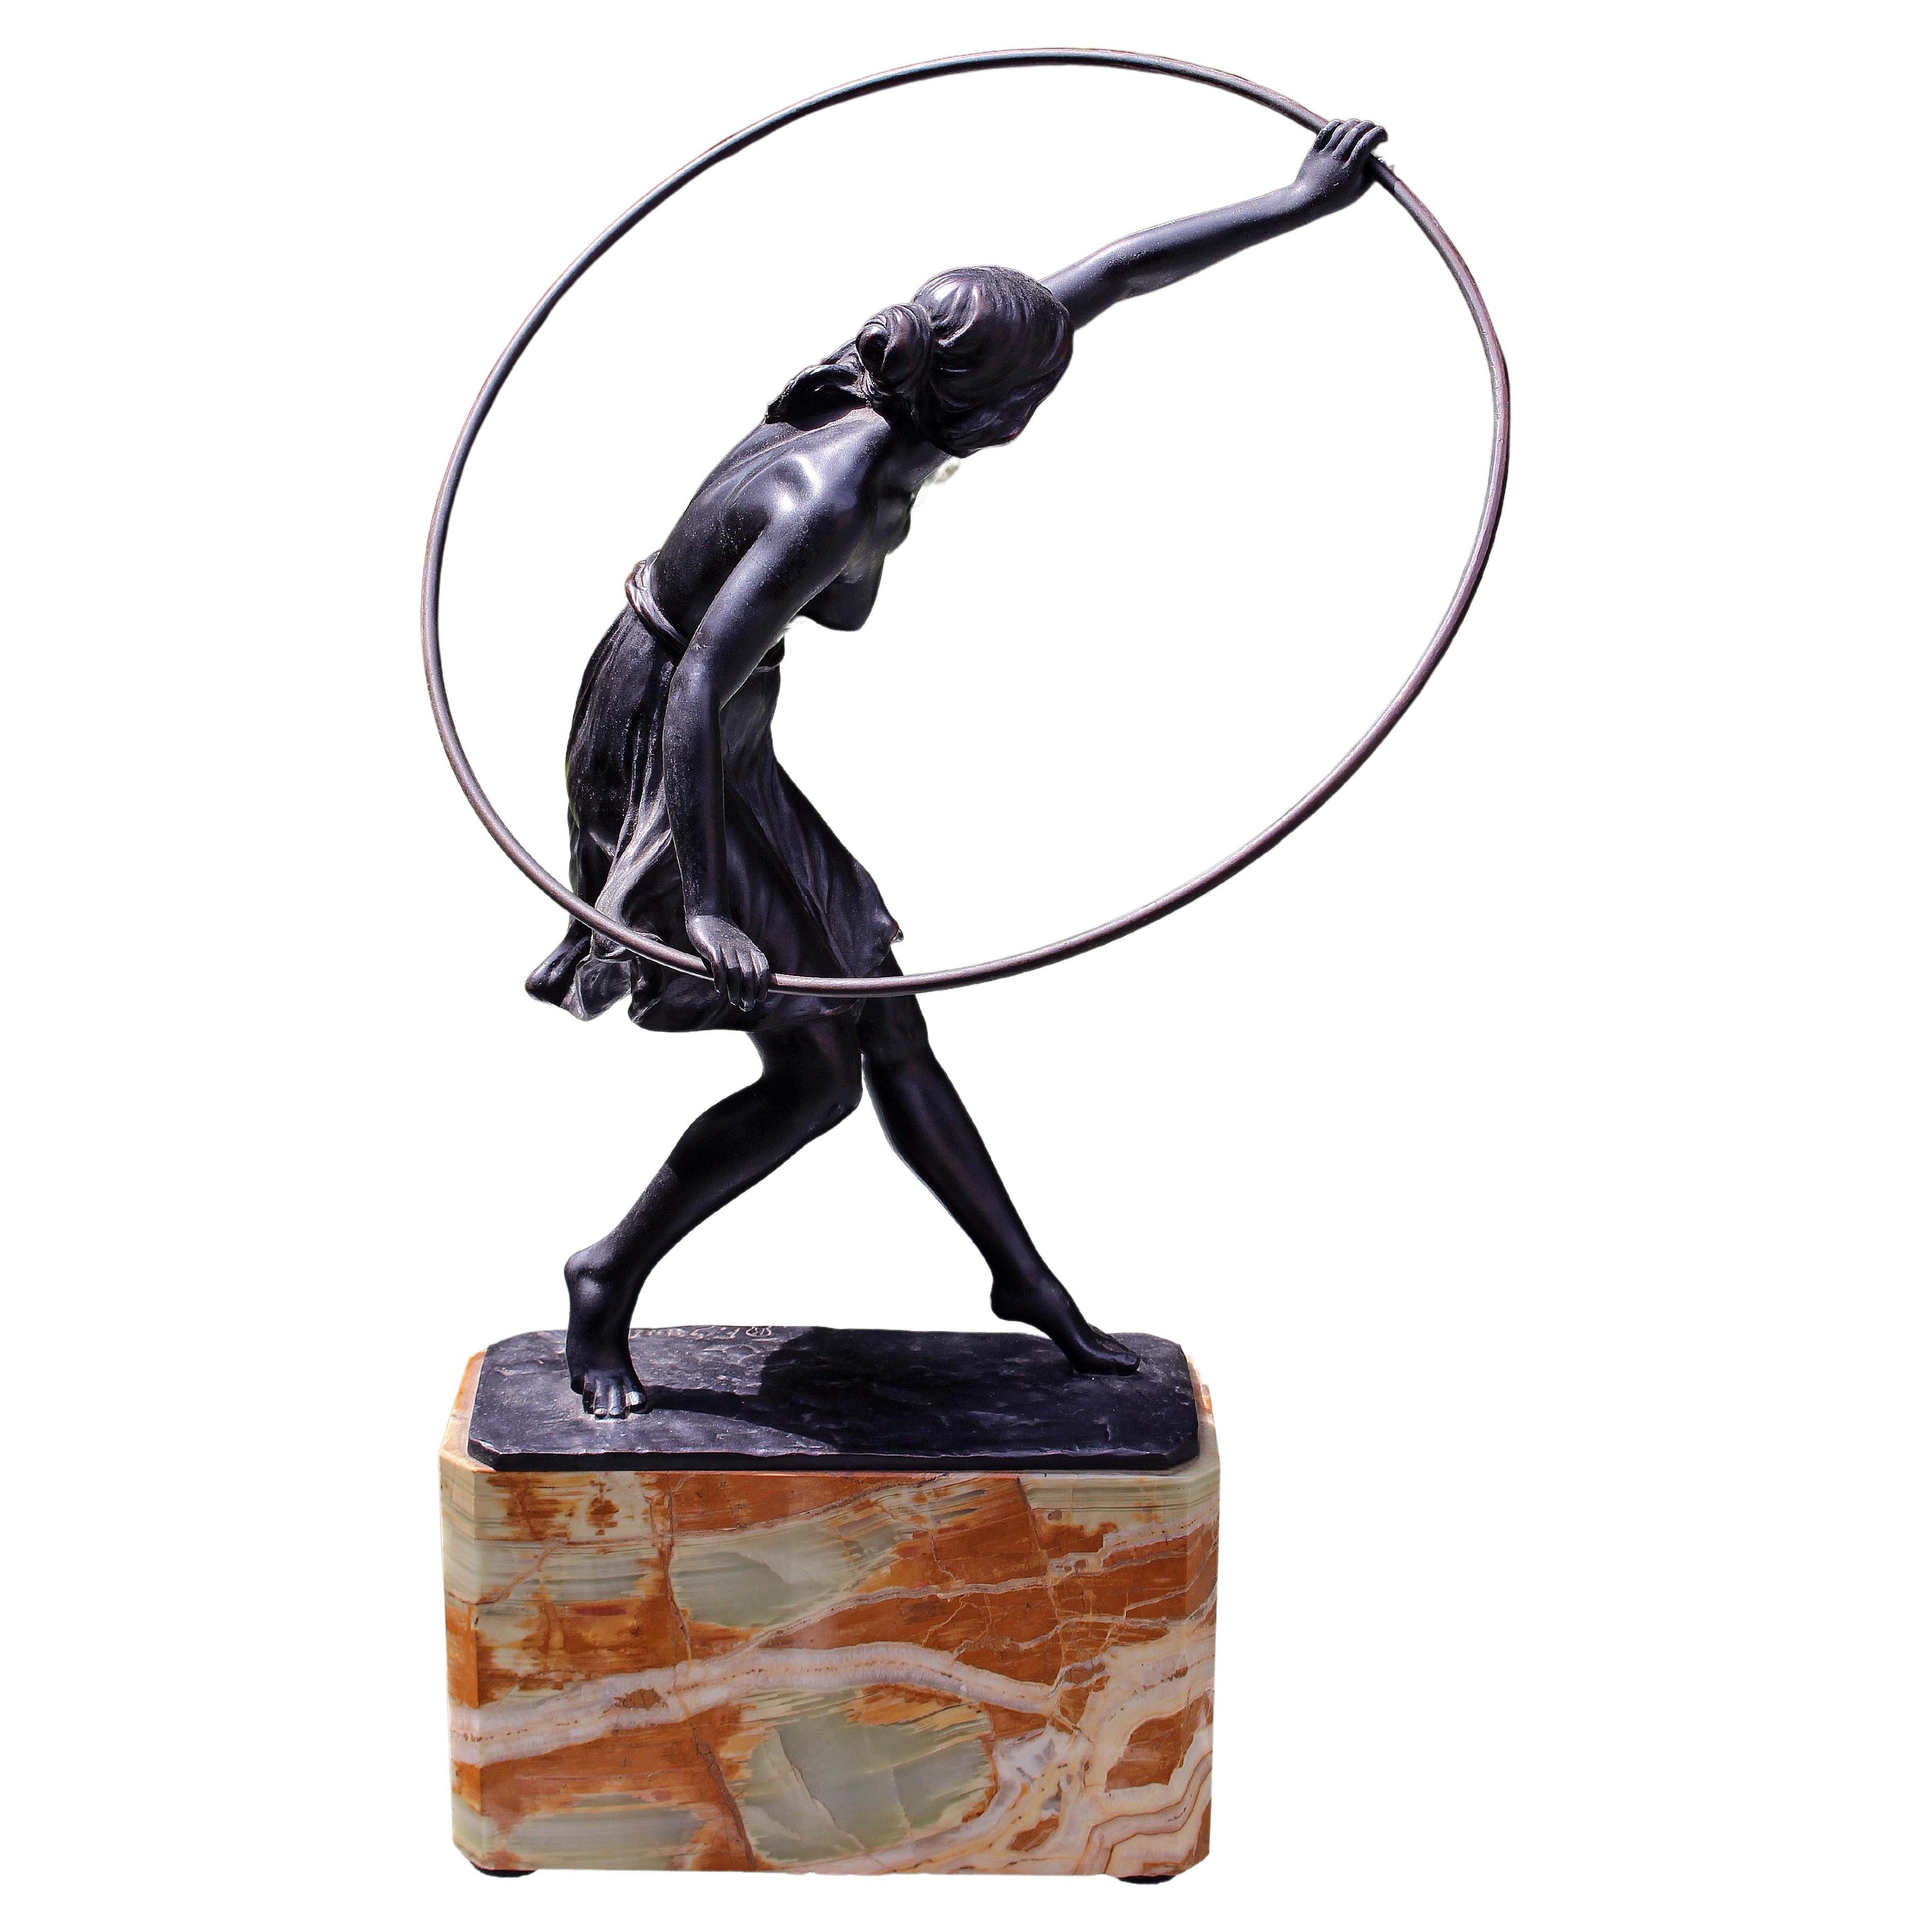 Circa 1920 Bronze Figure "Dancer with Hoop" Signed F. Sautner on Marble Base